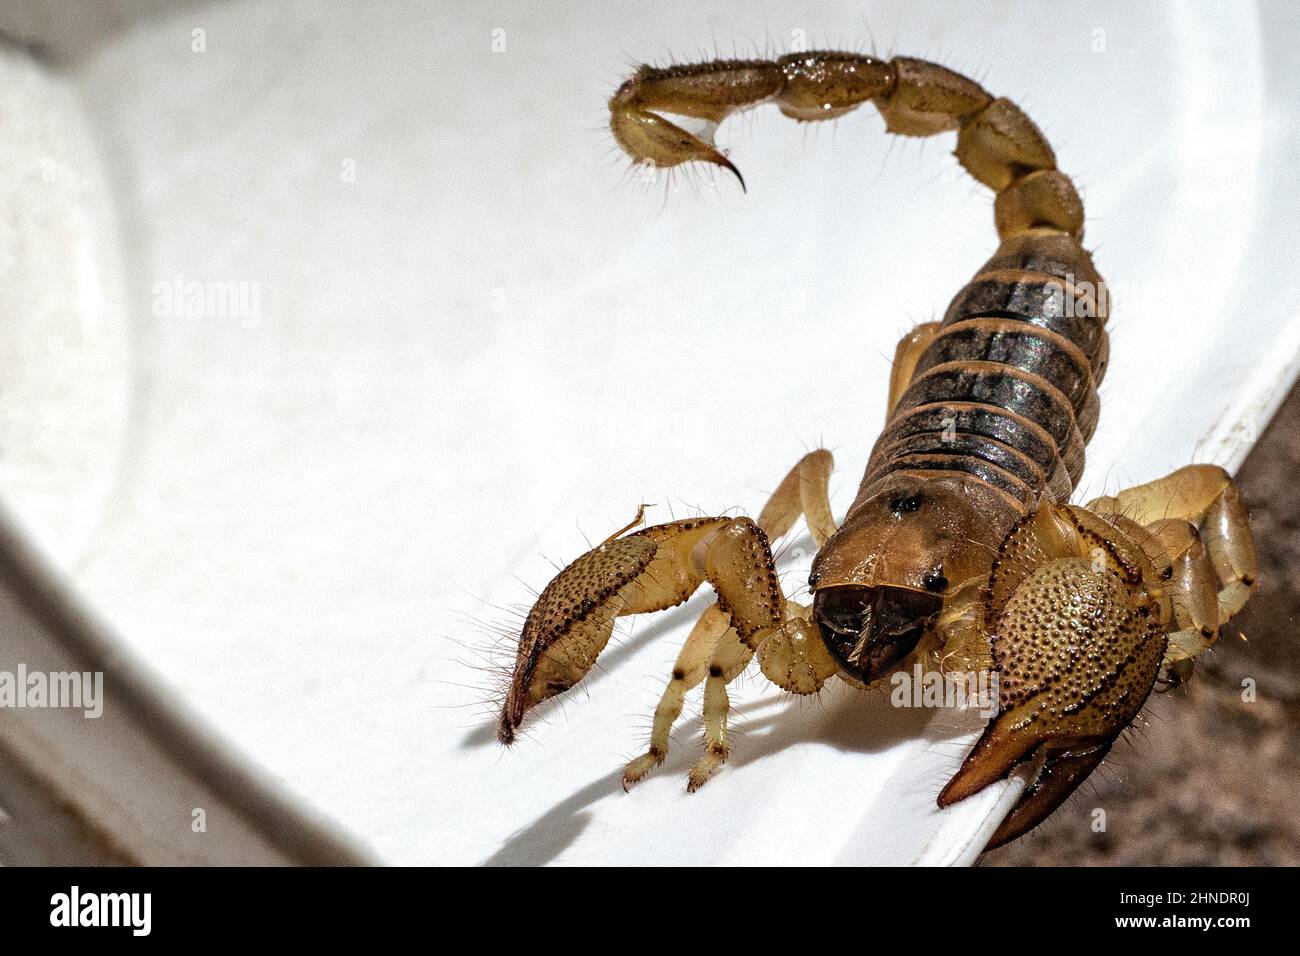 Burrowing Scorpion mostra pungere e grandi pinze. Foto Stock